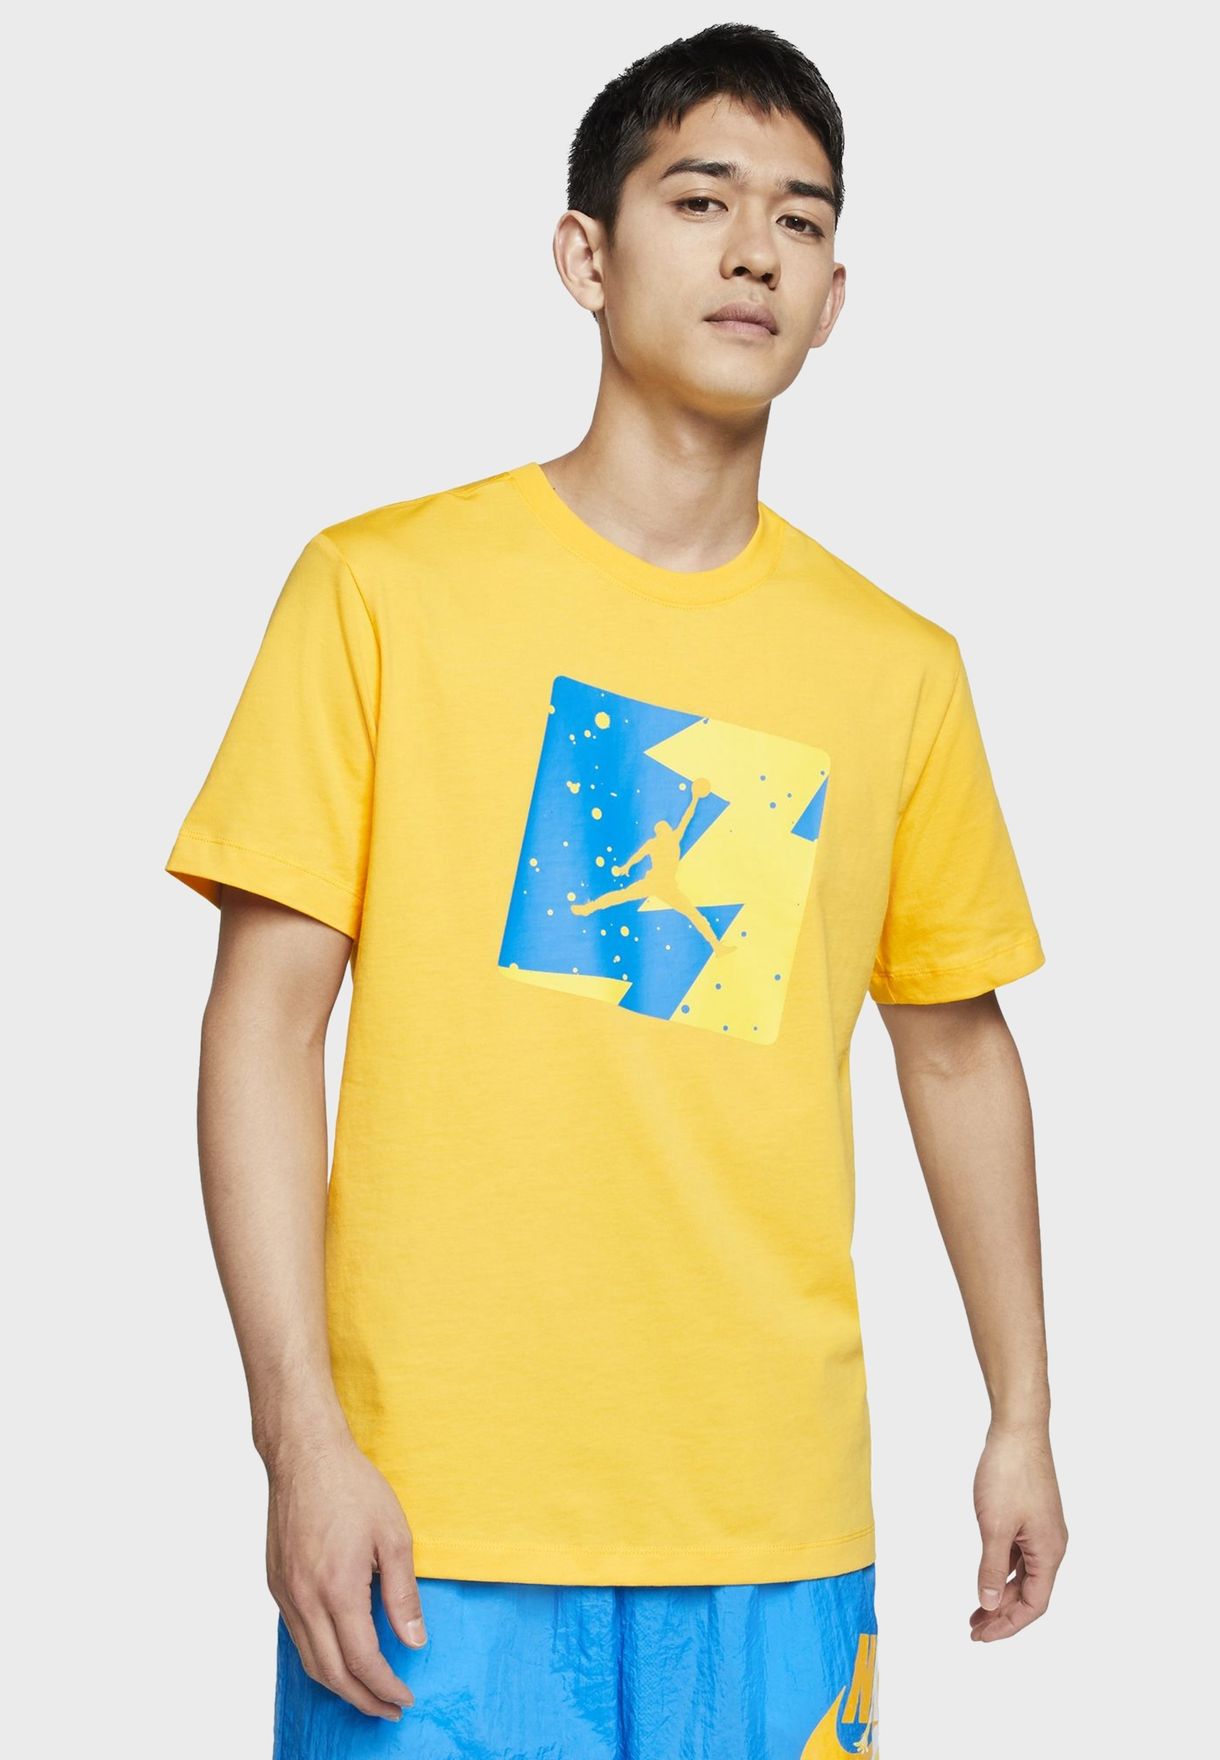 yellow jordan 1 shirt